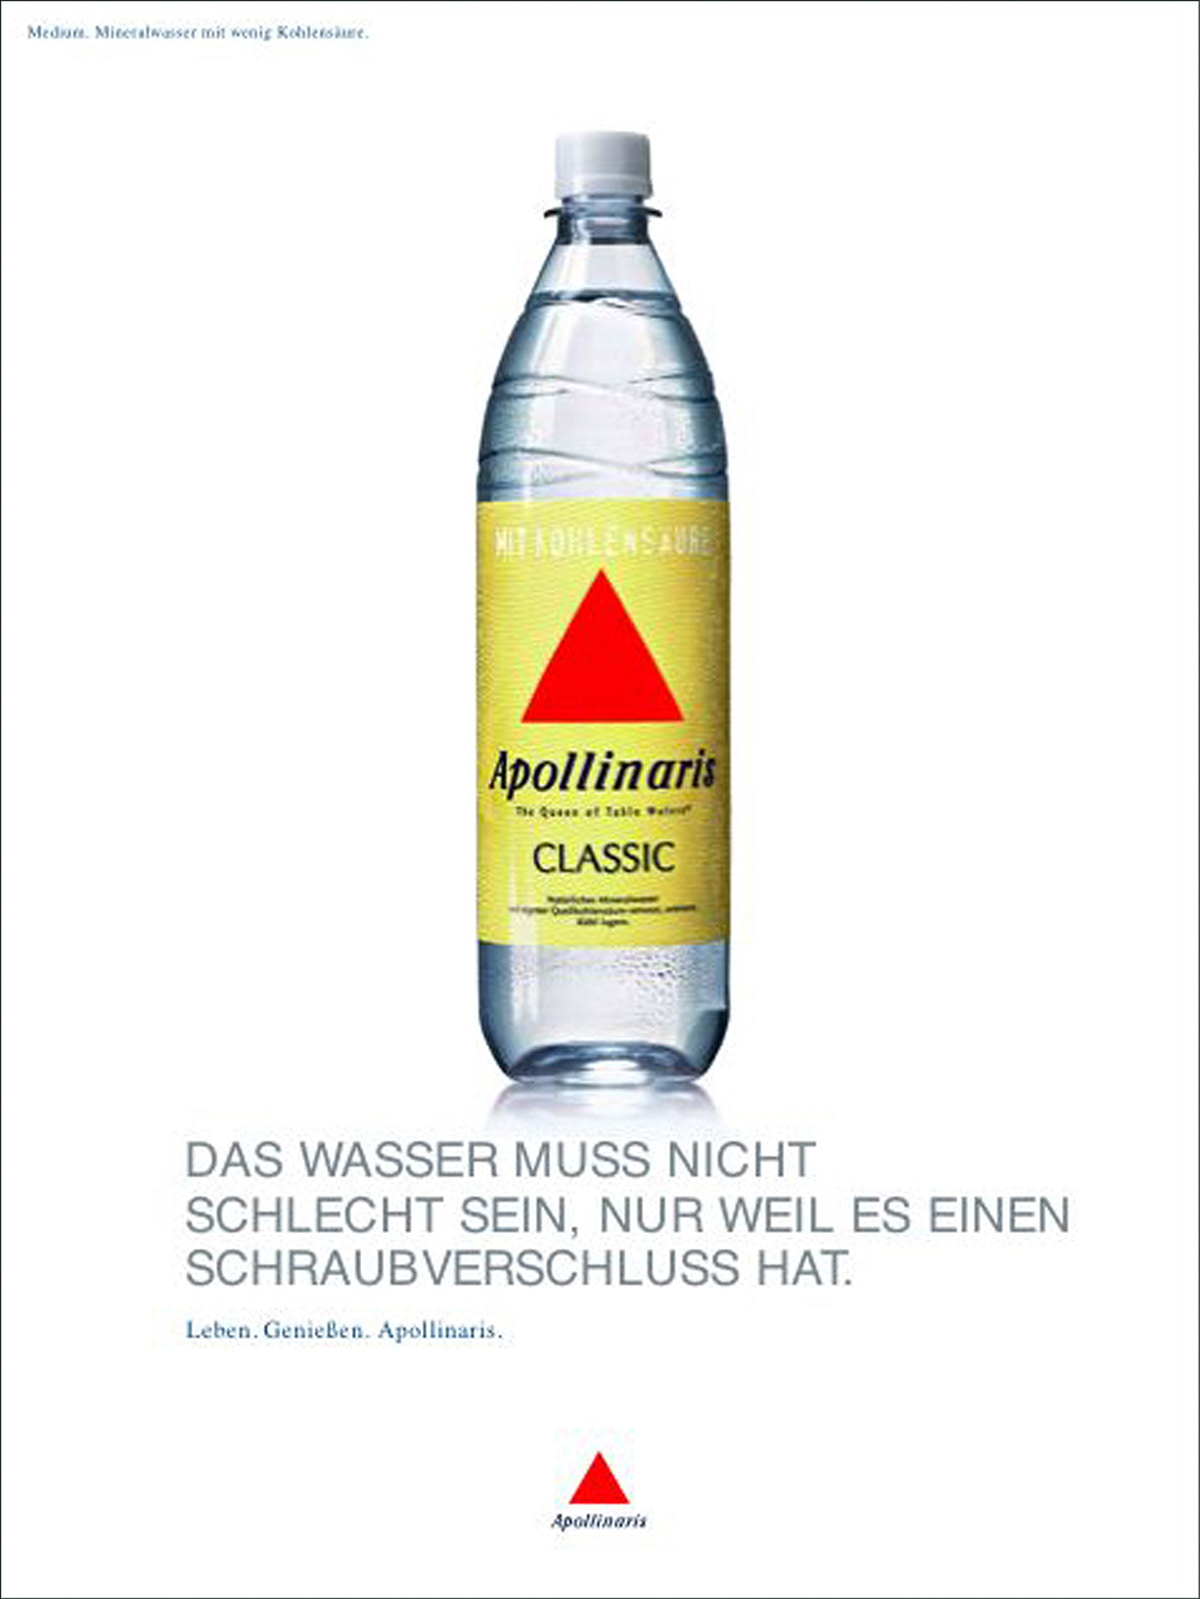 Konrad Witzig  Apollinaris campaign beverage mineral water